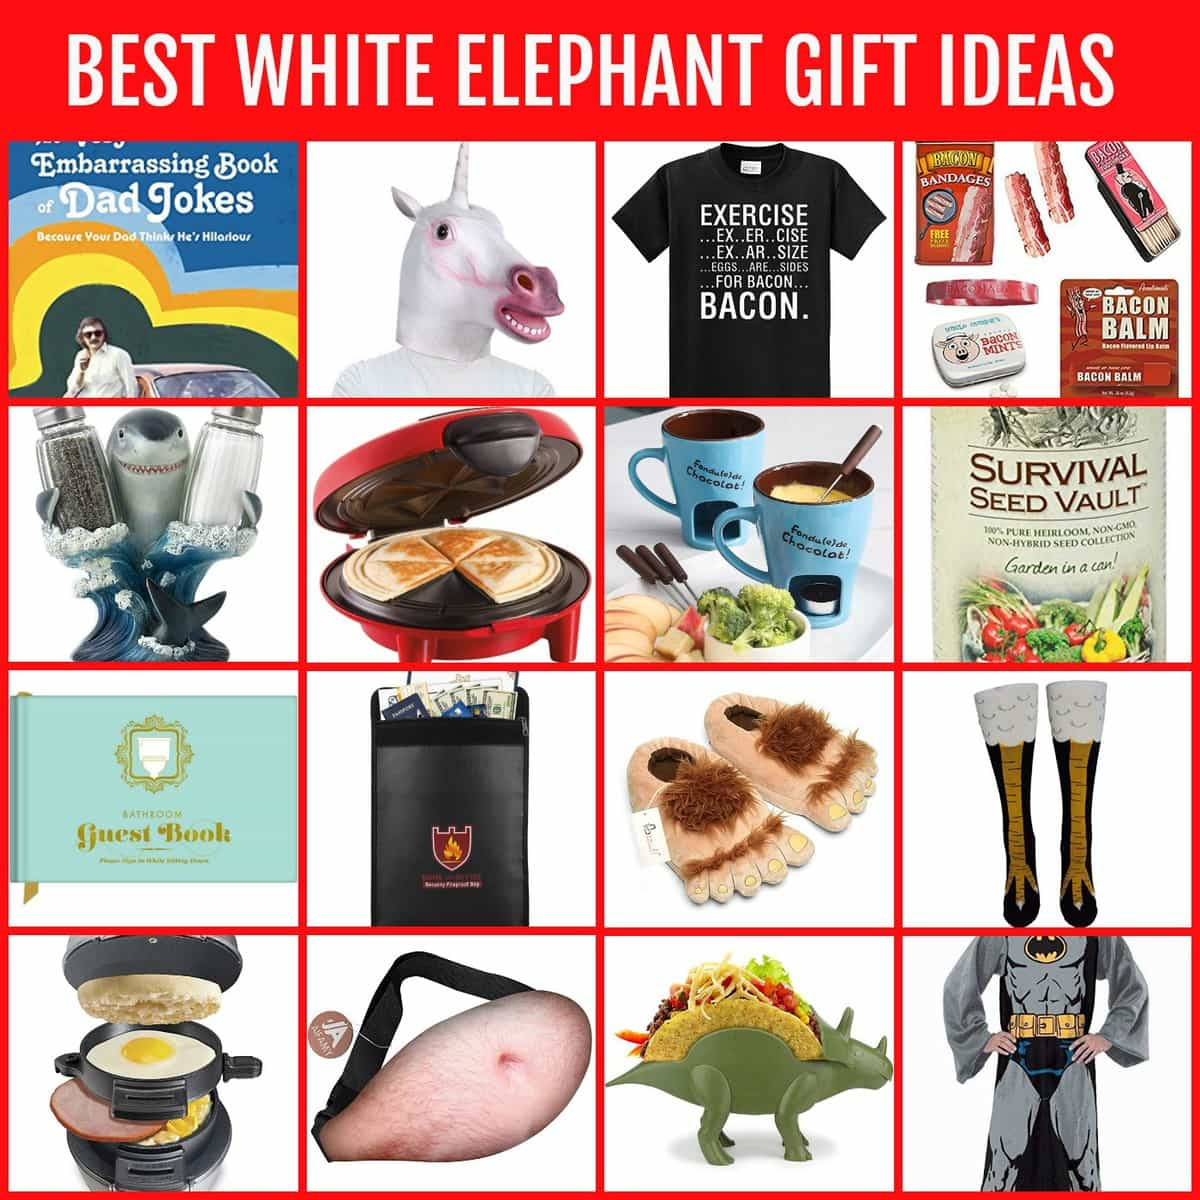 Best White Elephant Gift Ideas
 The BEST White Elephant Gifts Funny Useful & DIY Ideas